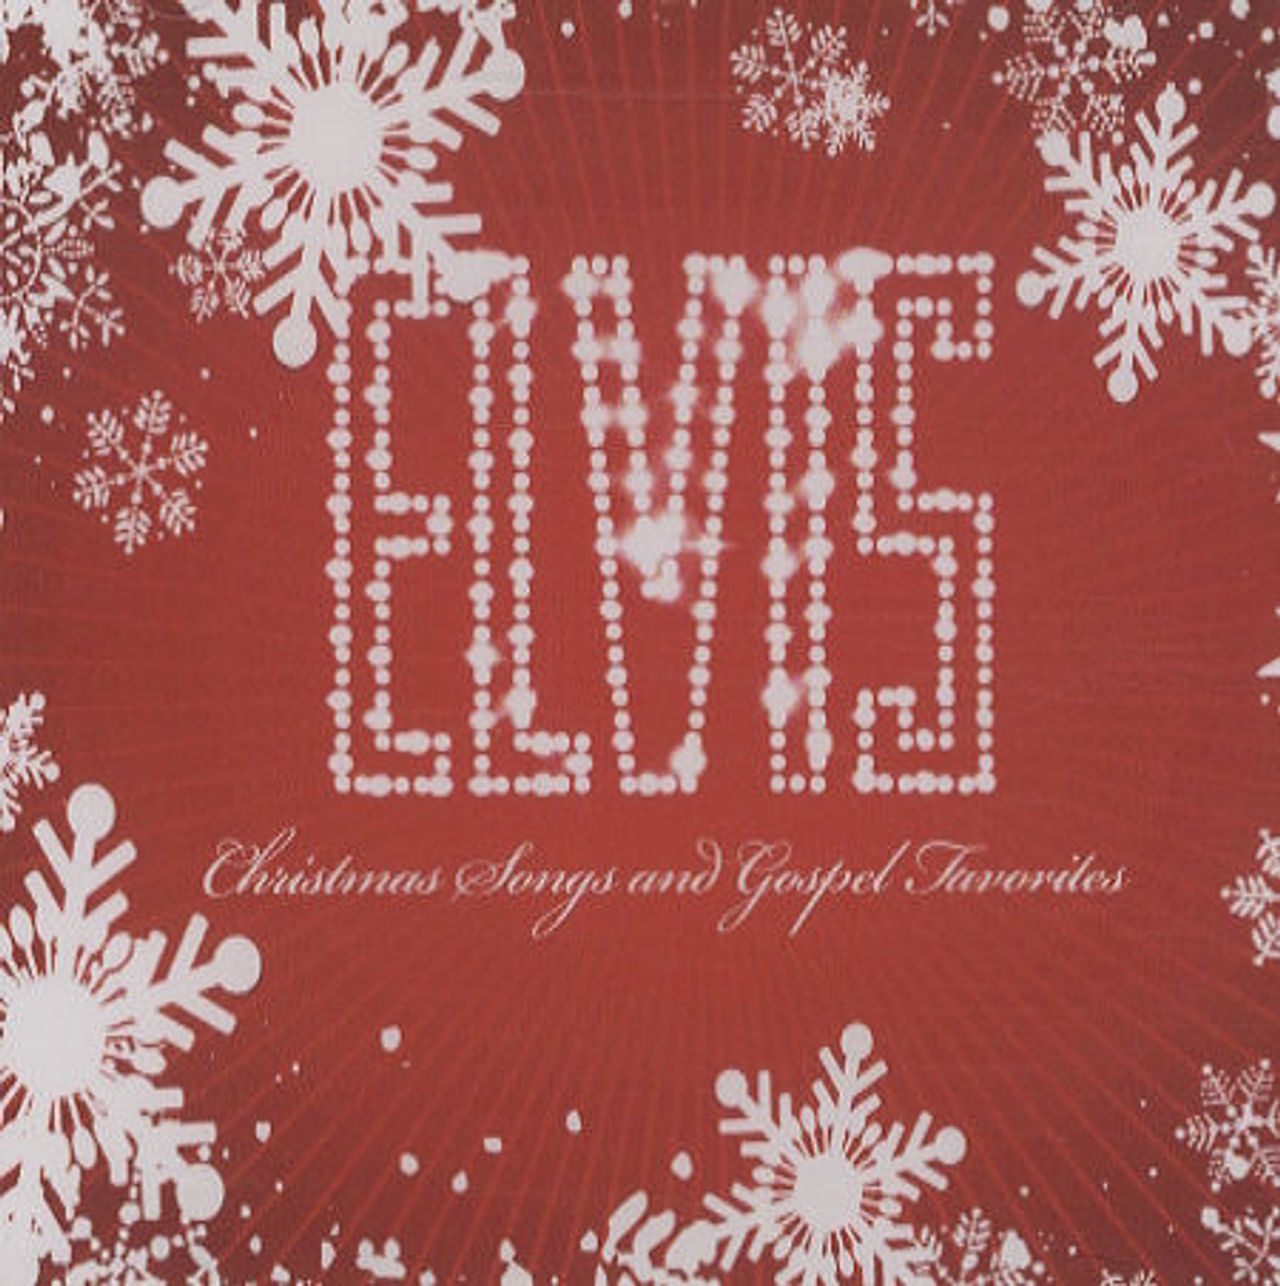 Elvis Presley Christmas Songs And Gospel Favorites US Promo CD album (CDLP) CD-R ACETATE